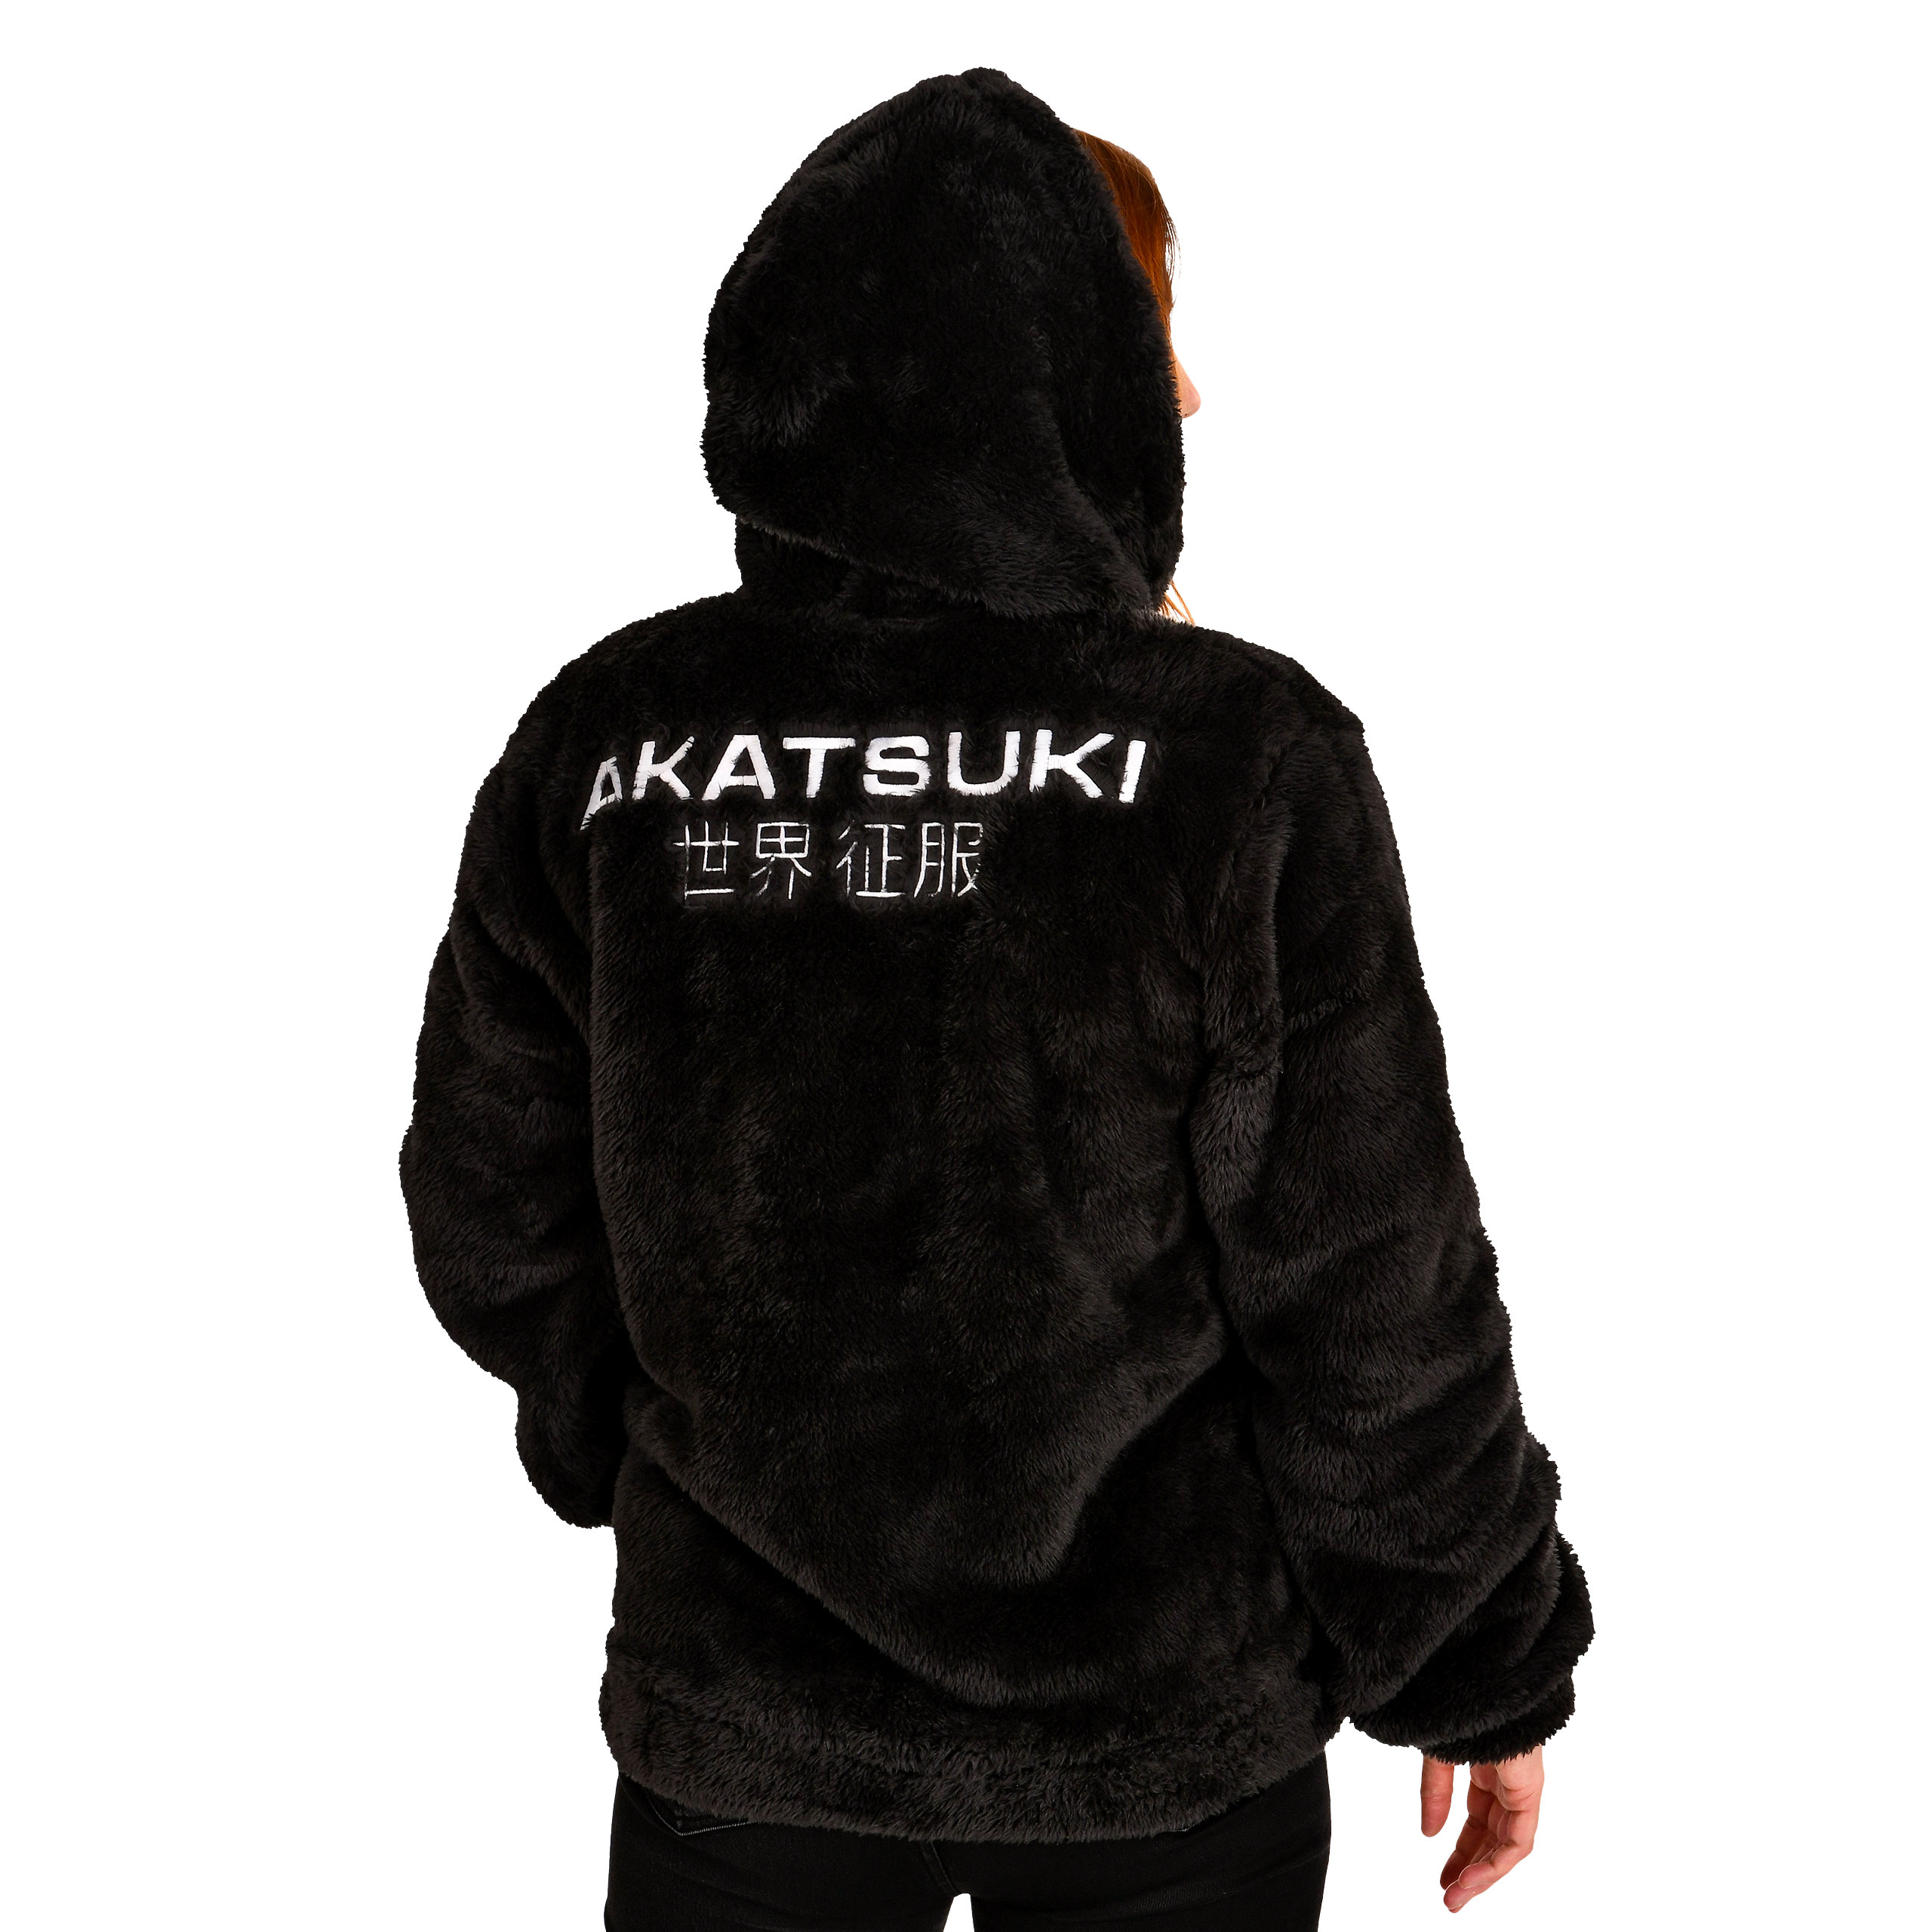 Naruto - Akatsuki Plüsch Jacke mit Kapuze schwarz